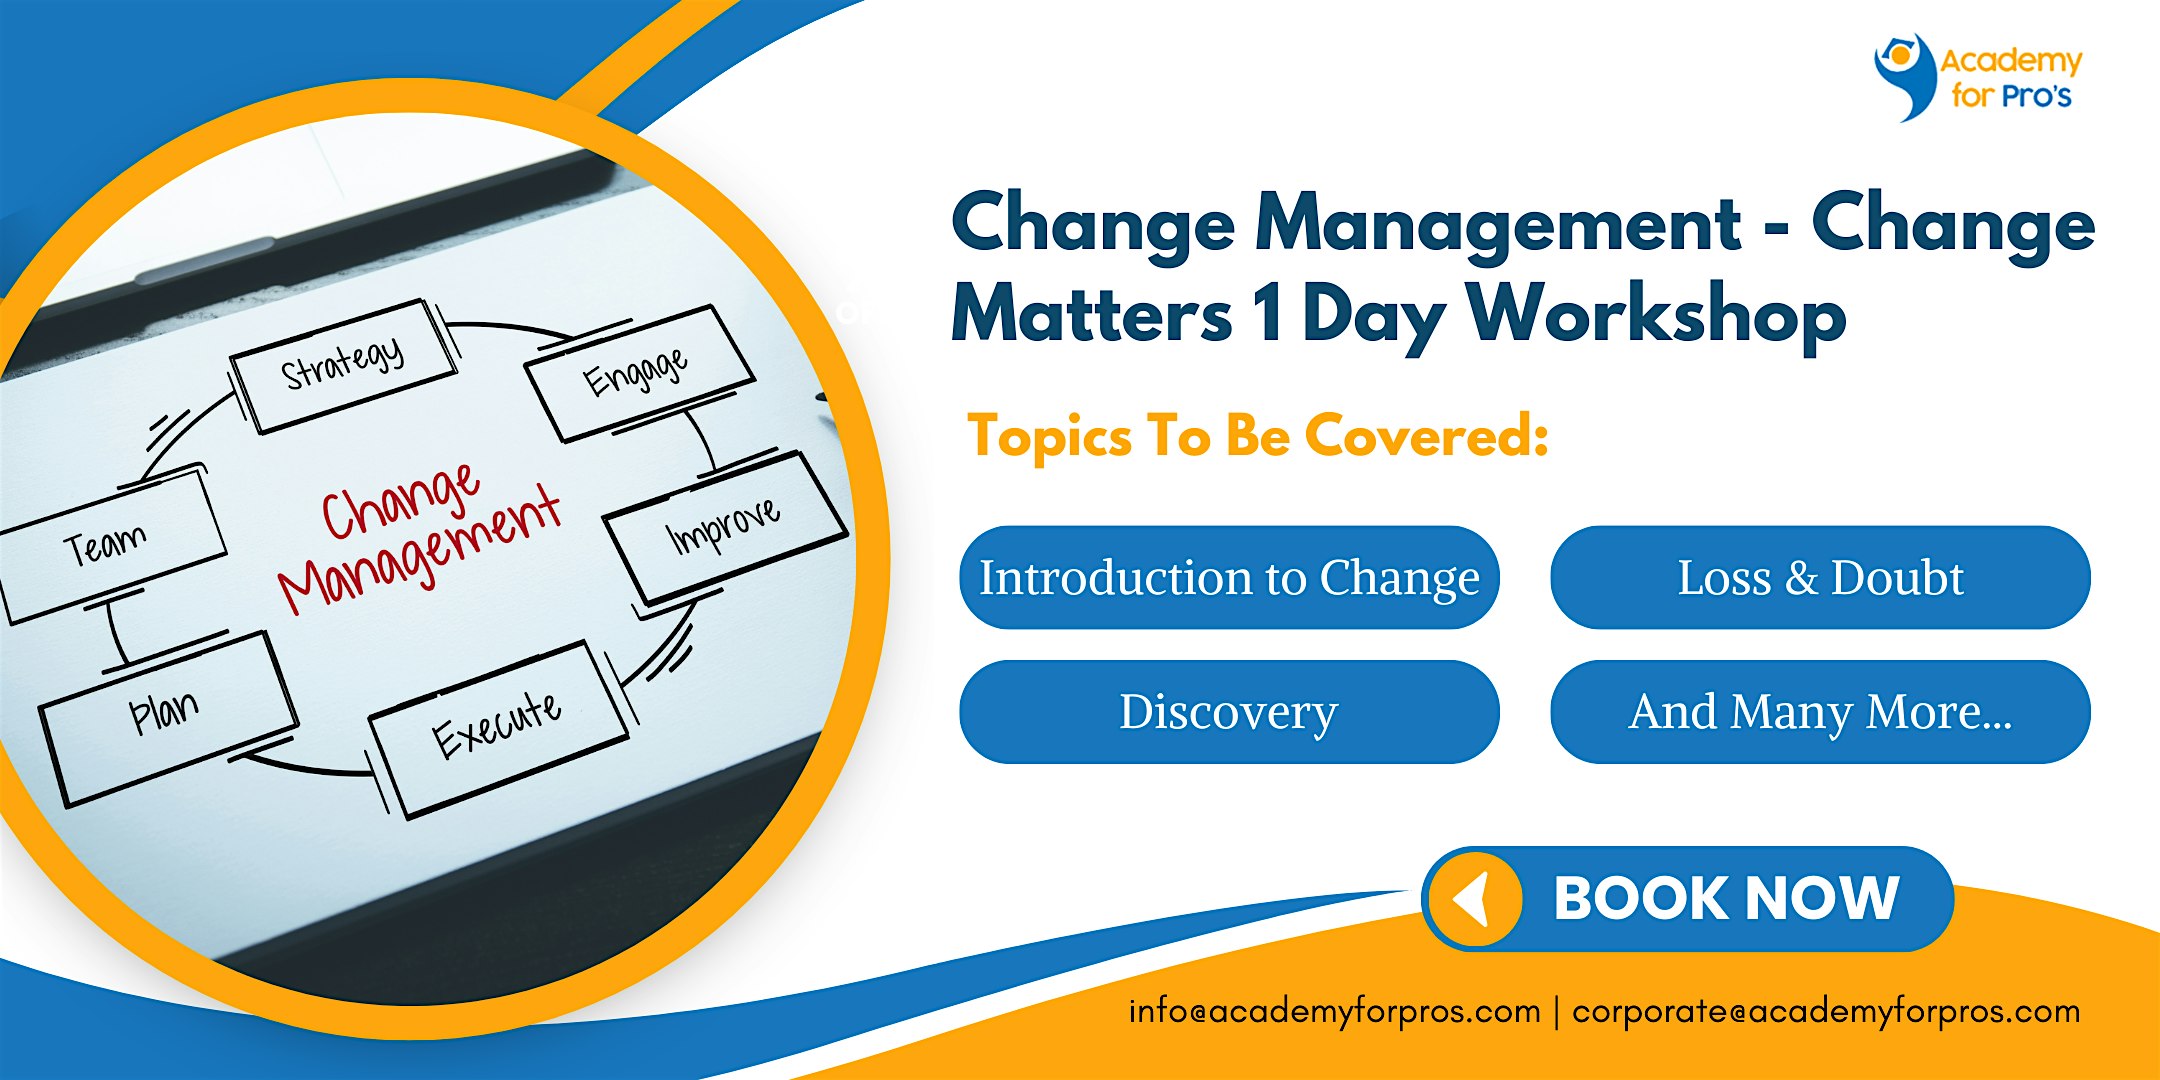 Change Management - Change Matters 1 Day Workshop in Broken Arrow, OK